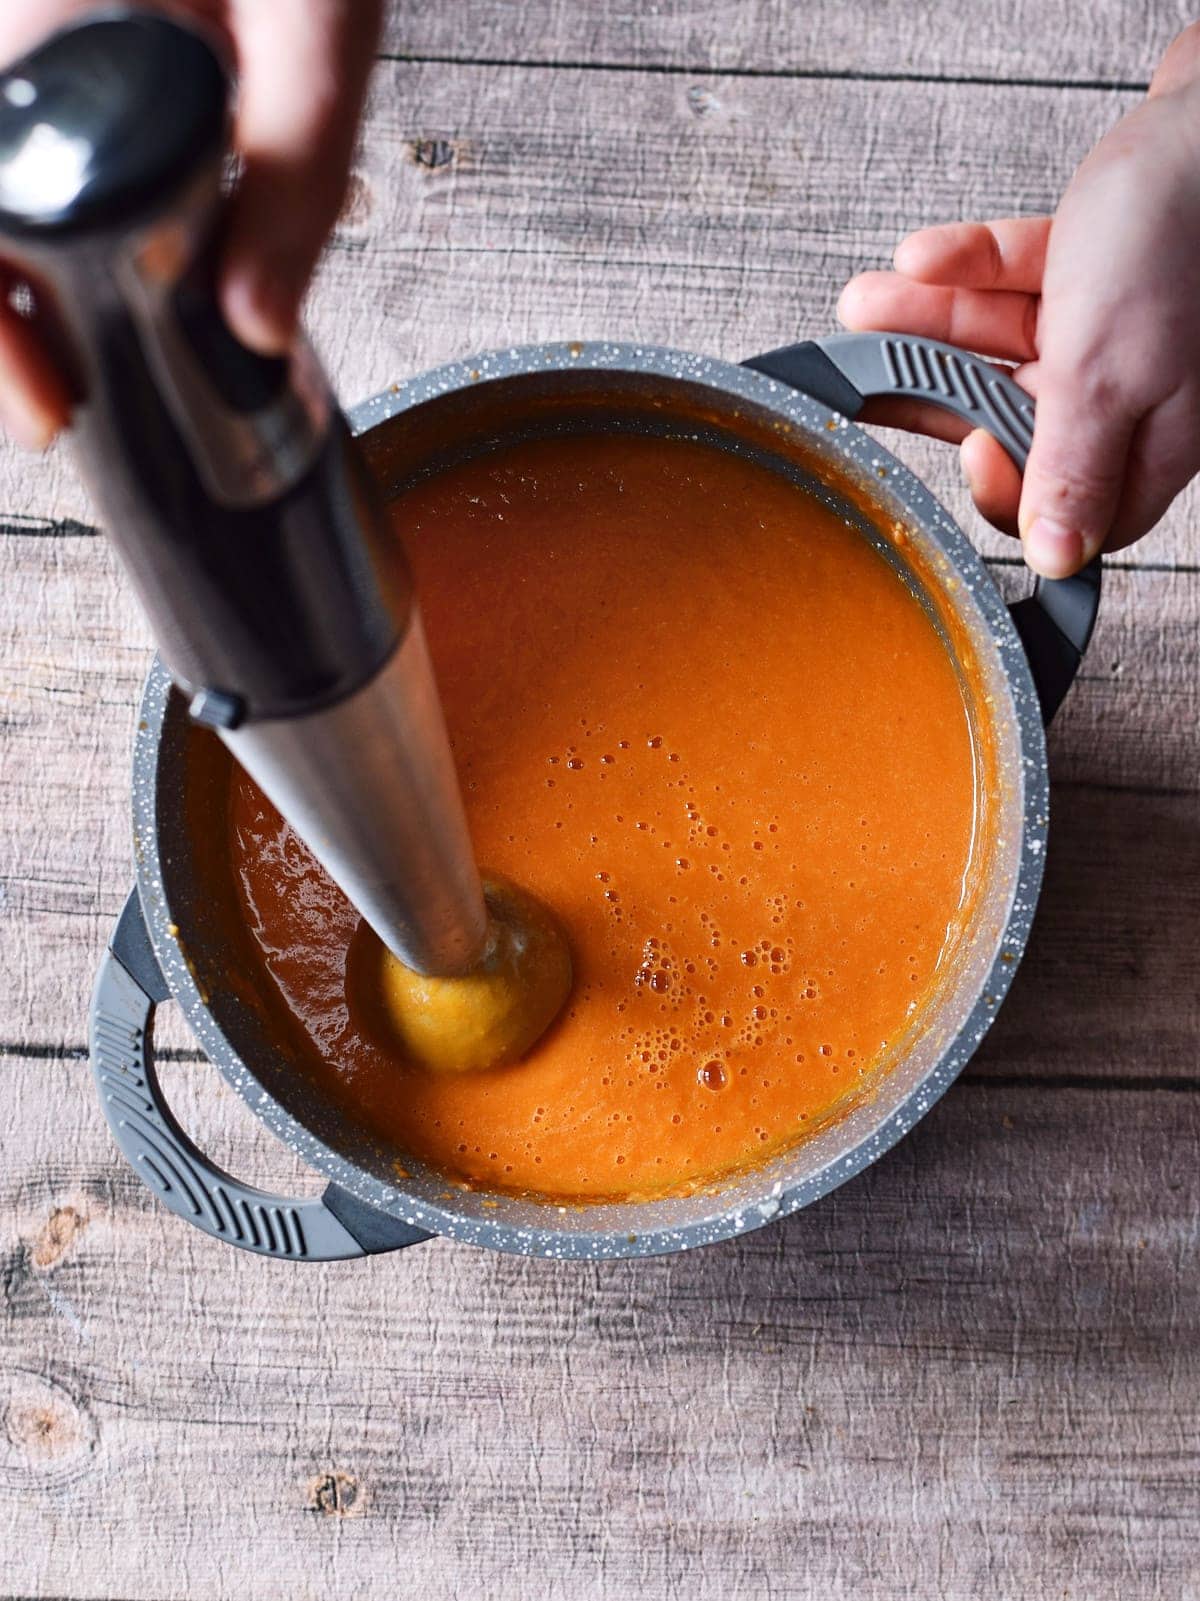 blending tomato sauce in pot with immersion blender